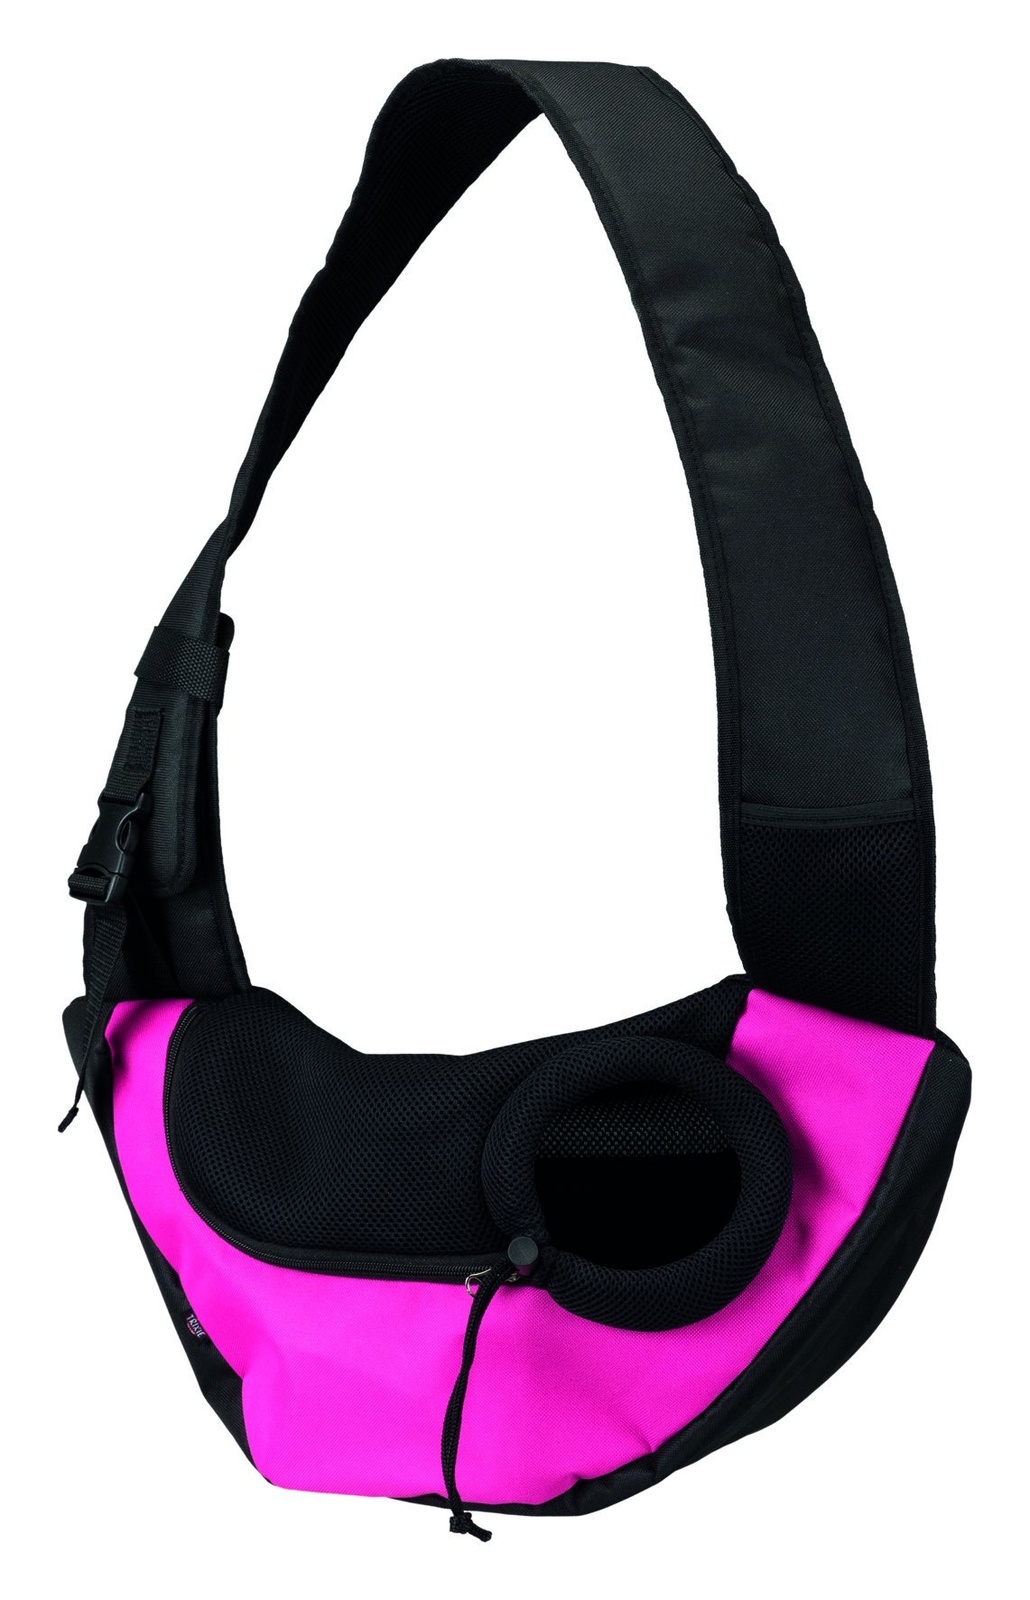 Trixie Trixie слинг-переноска Sling, розовая с чёрным (320 г) trixie trixie слинг переноска sling розовая с чёрным 320 г